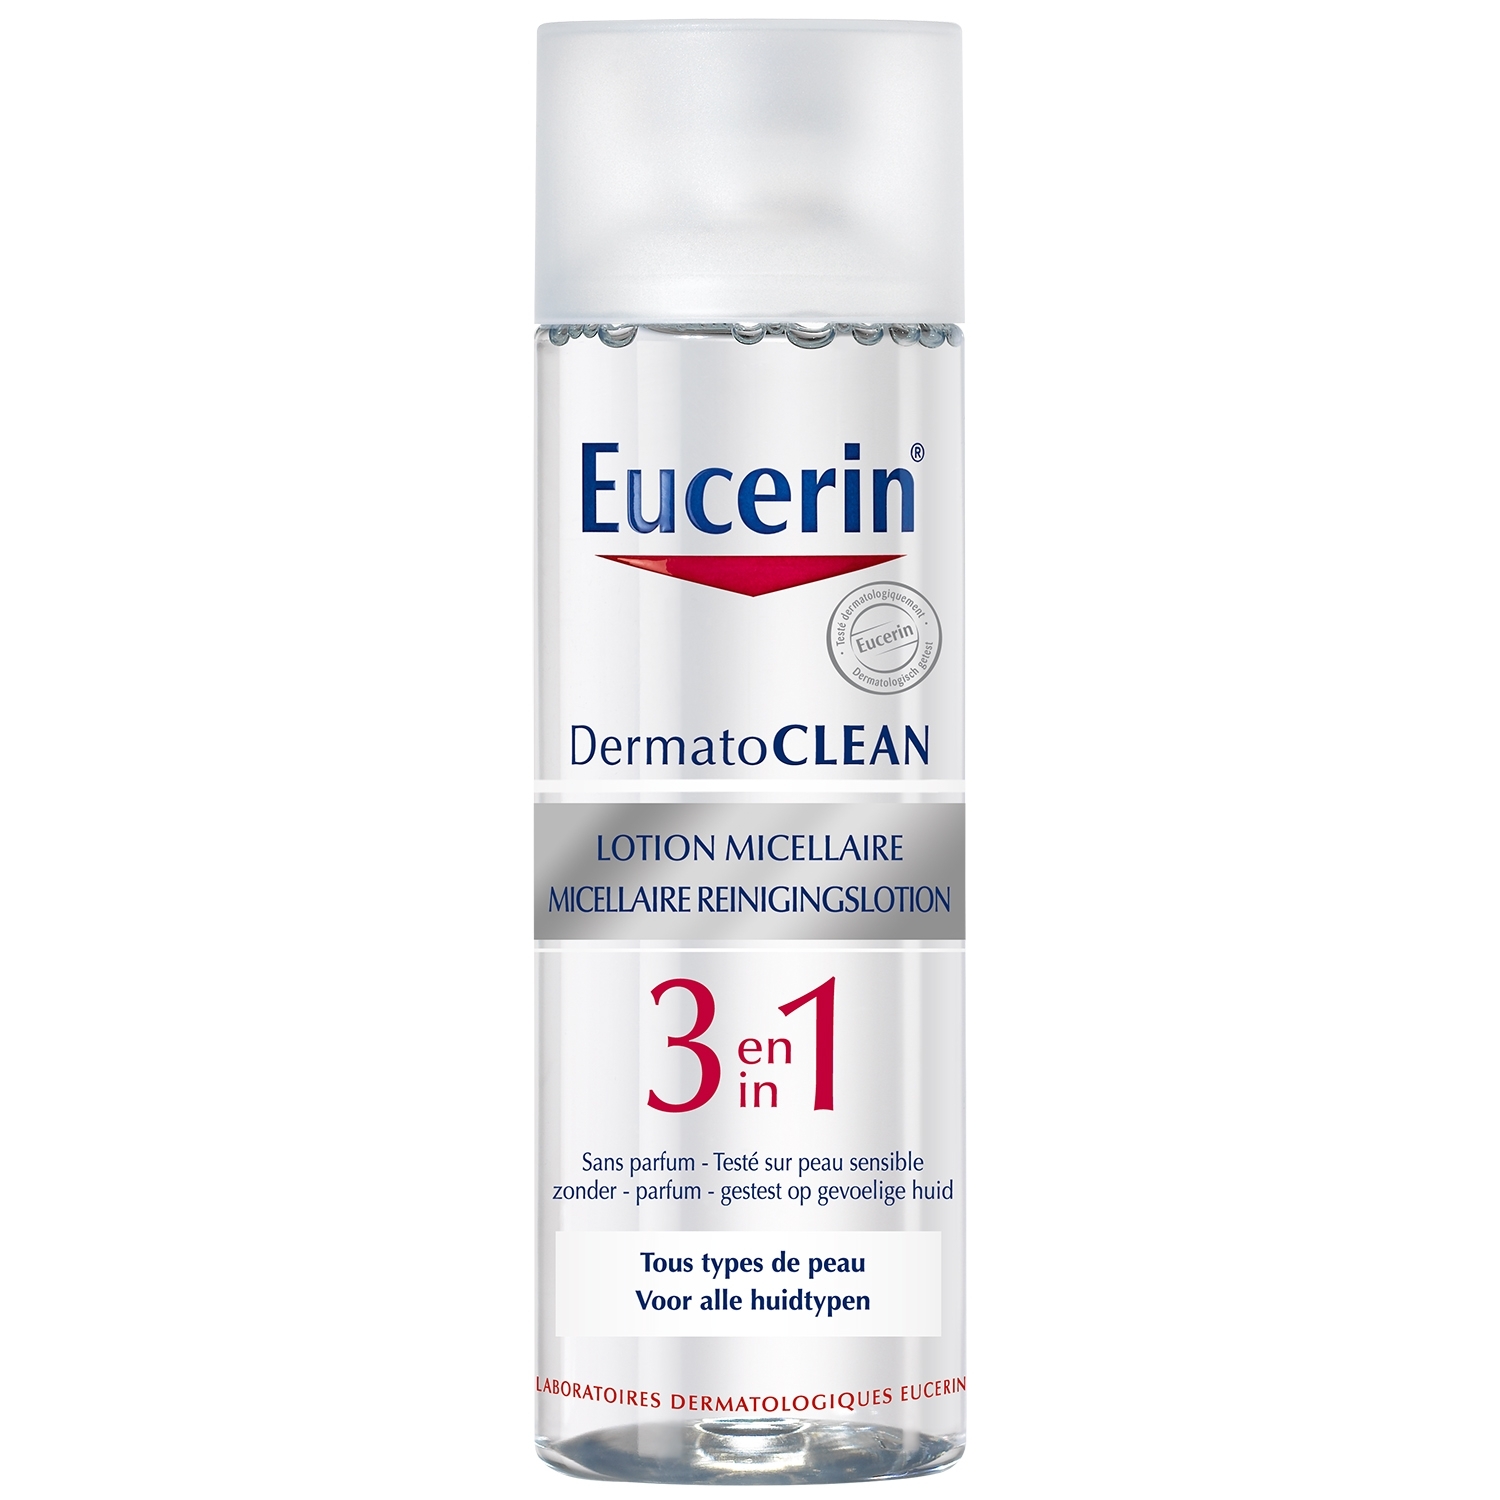 Eucerin Dermatoclean lotion micellair - 3 in 1  - 200 ml